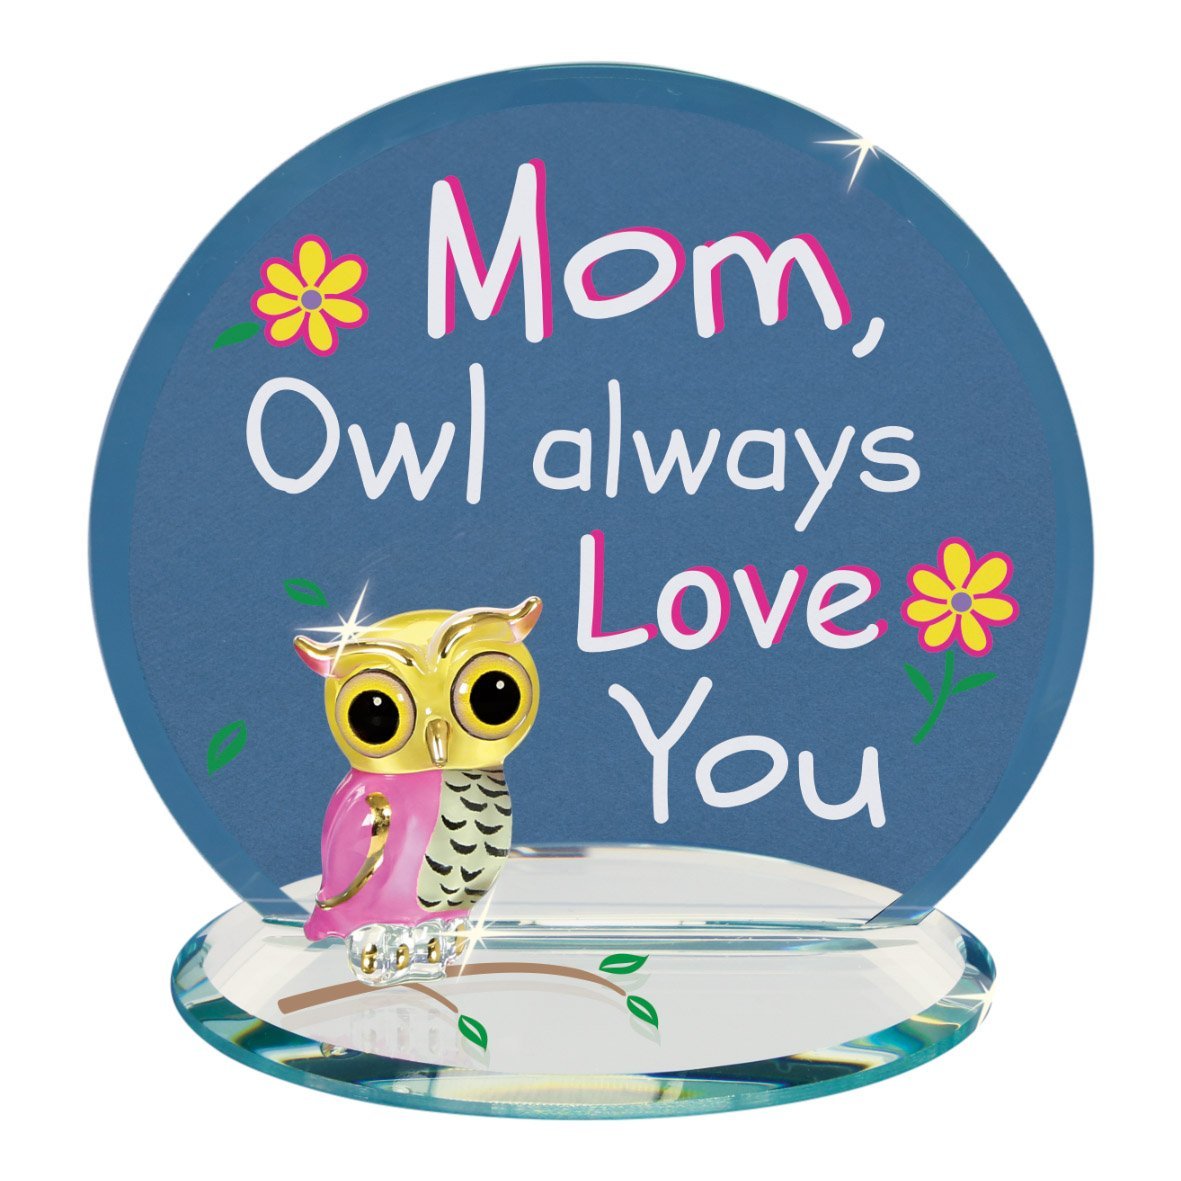 Glass Owl "Mom, Owl Always Love You" Handcrafted Figurine